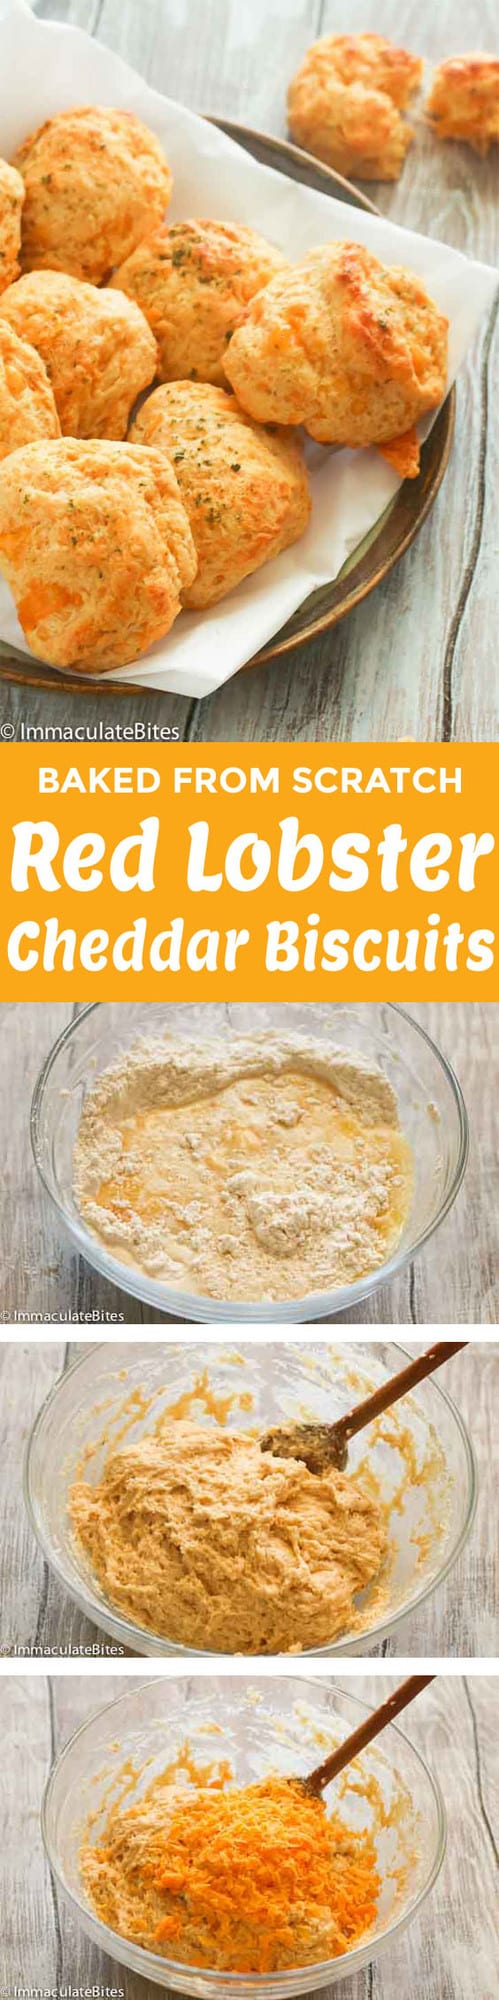 Red Lobster Cheddar Bay Biscuits